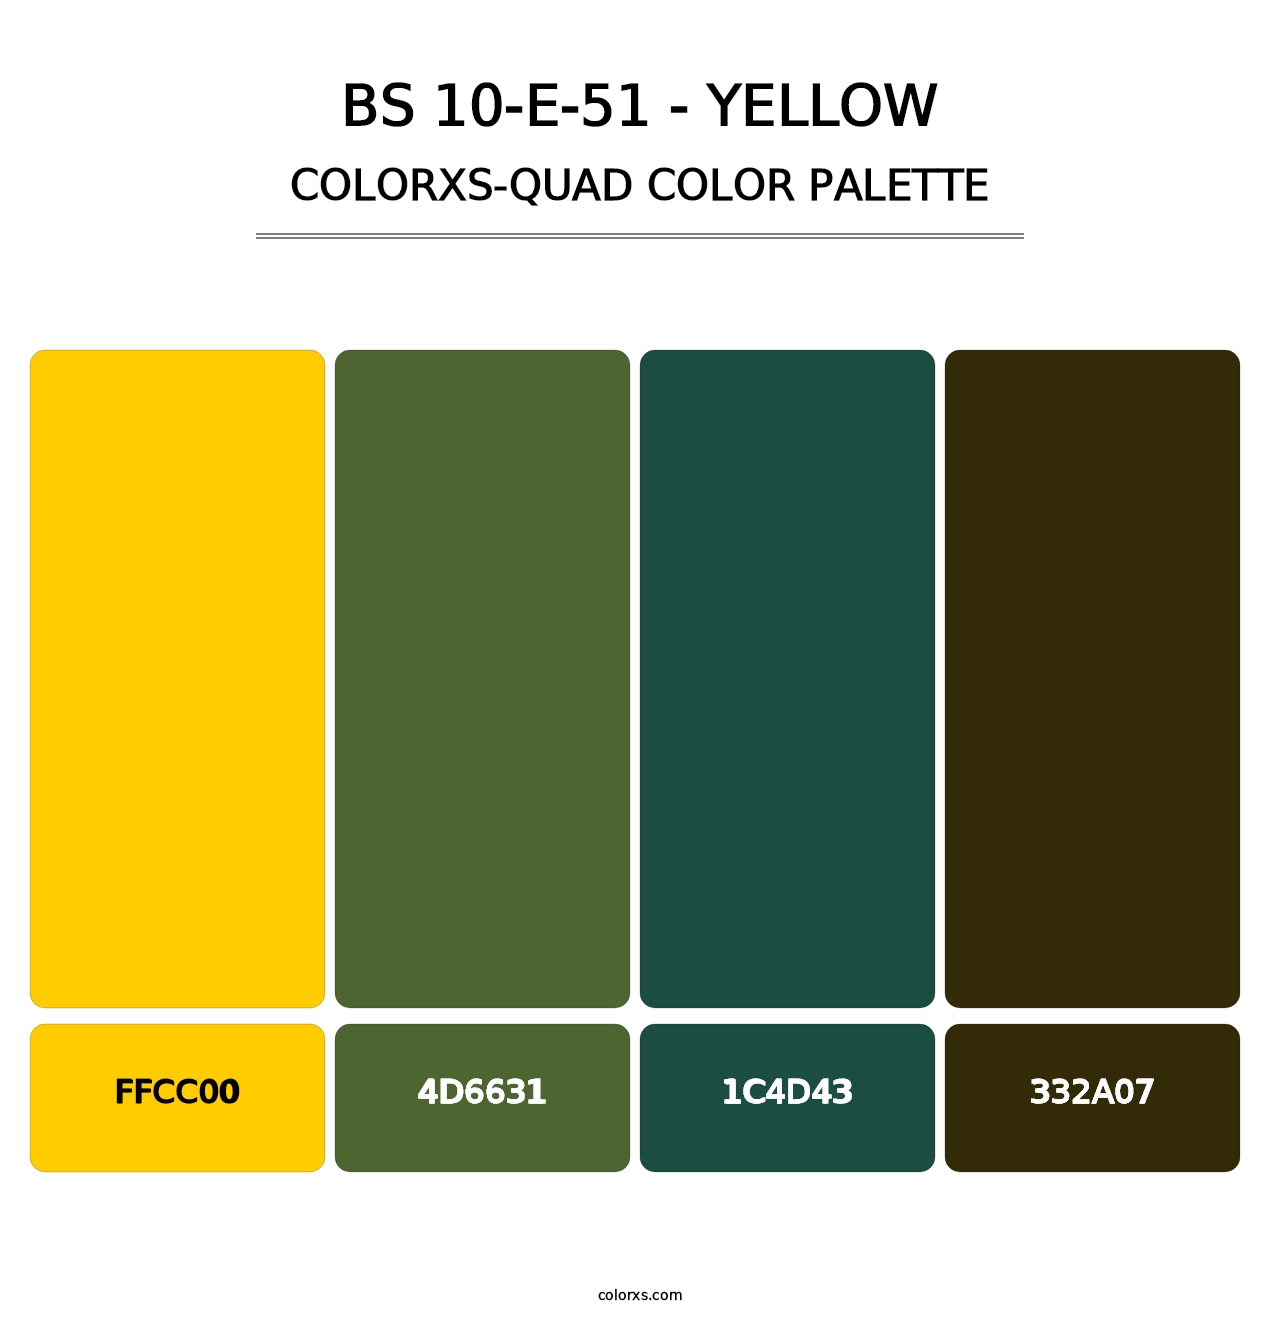 BS 10-E-51 - Yellow - Colorxs Quad Palette